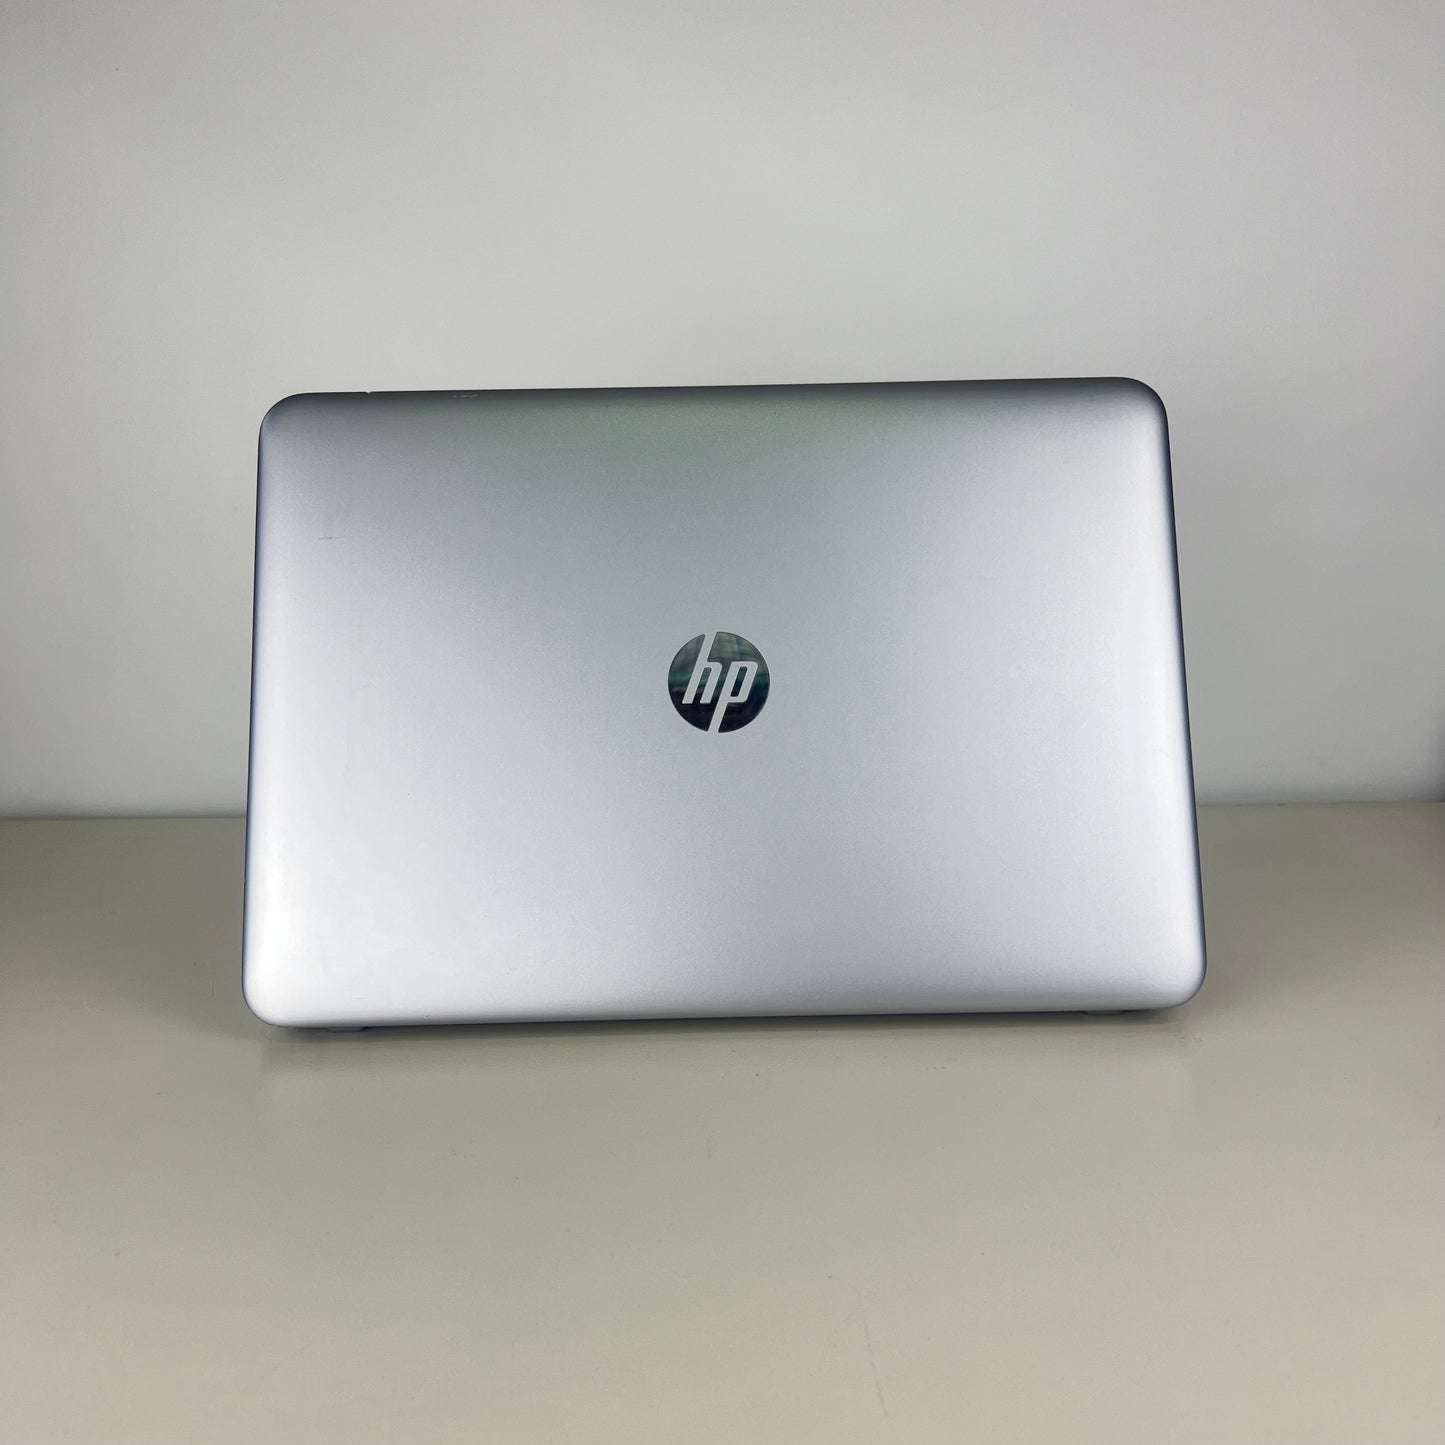 HP ProBook 450 G4 Laptop